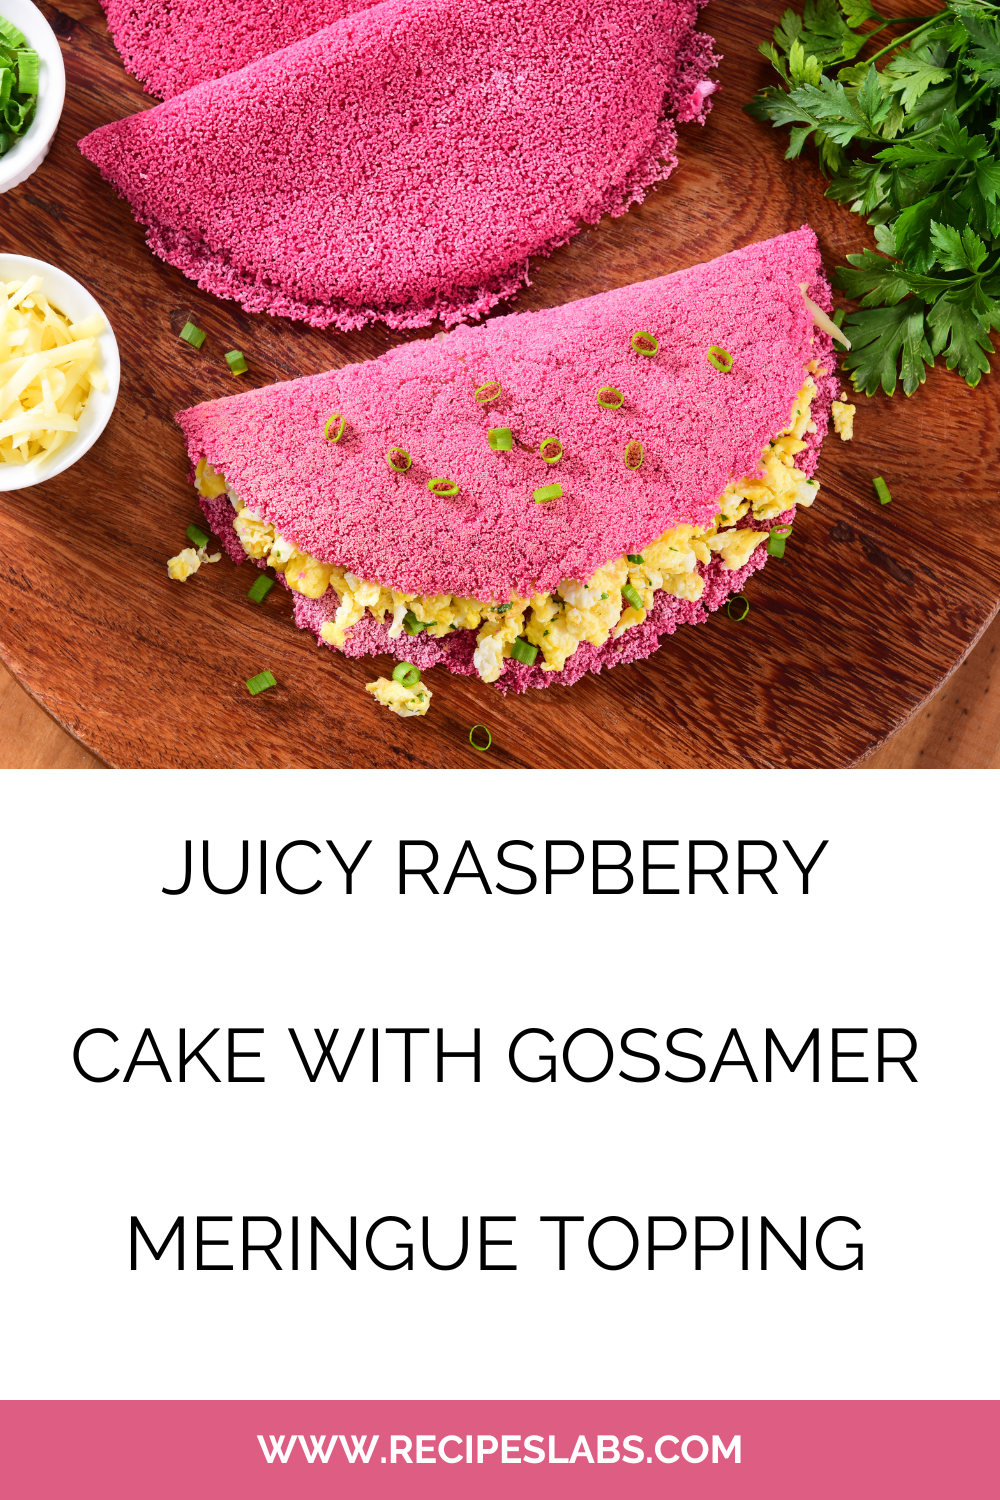 Juicy Raspberry Cake With Gossamer Meringue Topping